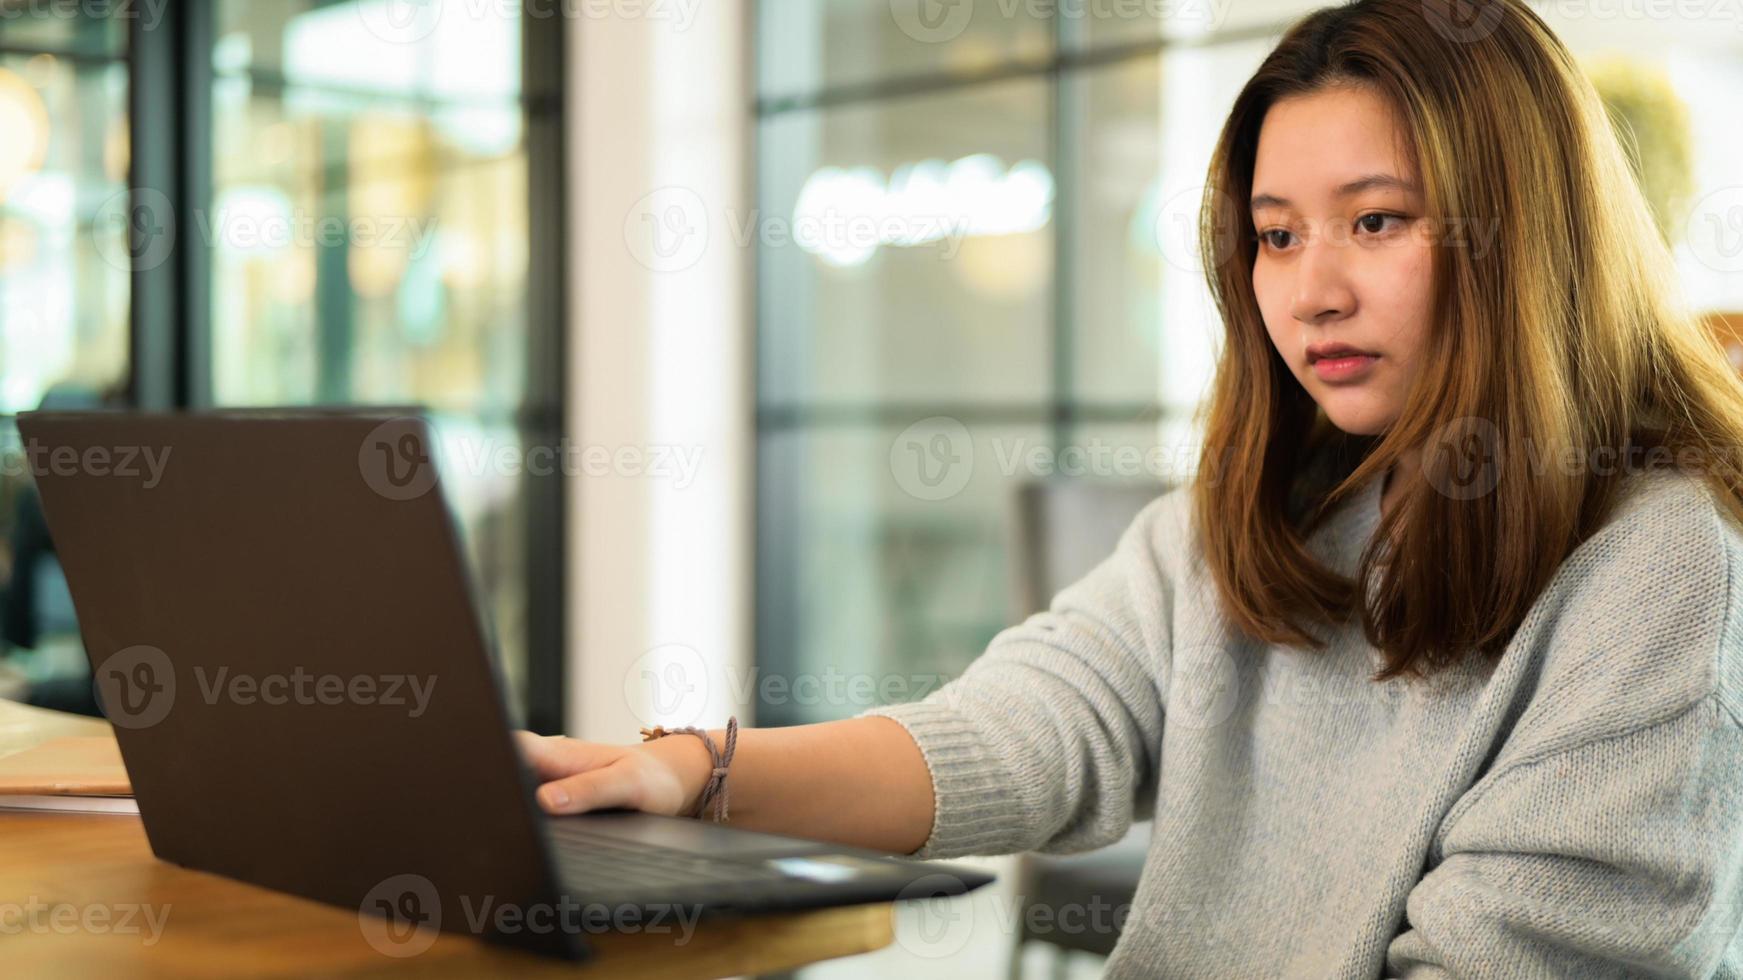 adolescente asiática usando laptop na mesa, aprendizagem on-line, bate-papo por vídeo. foto